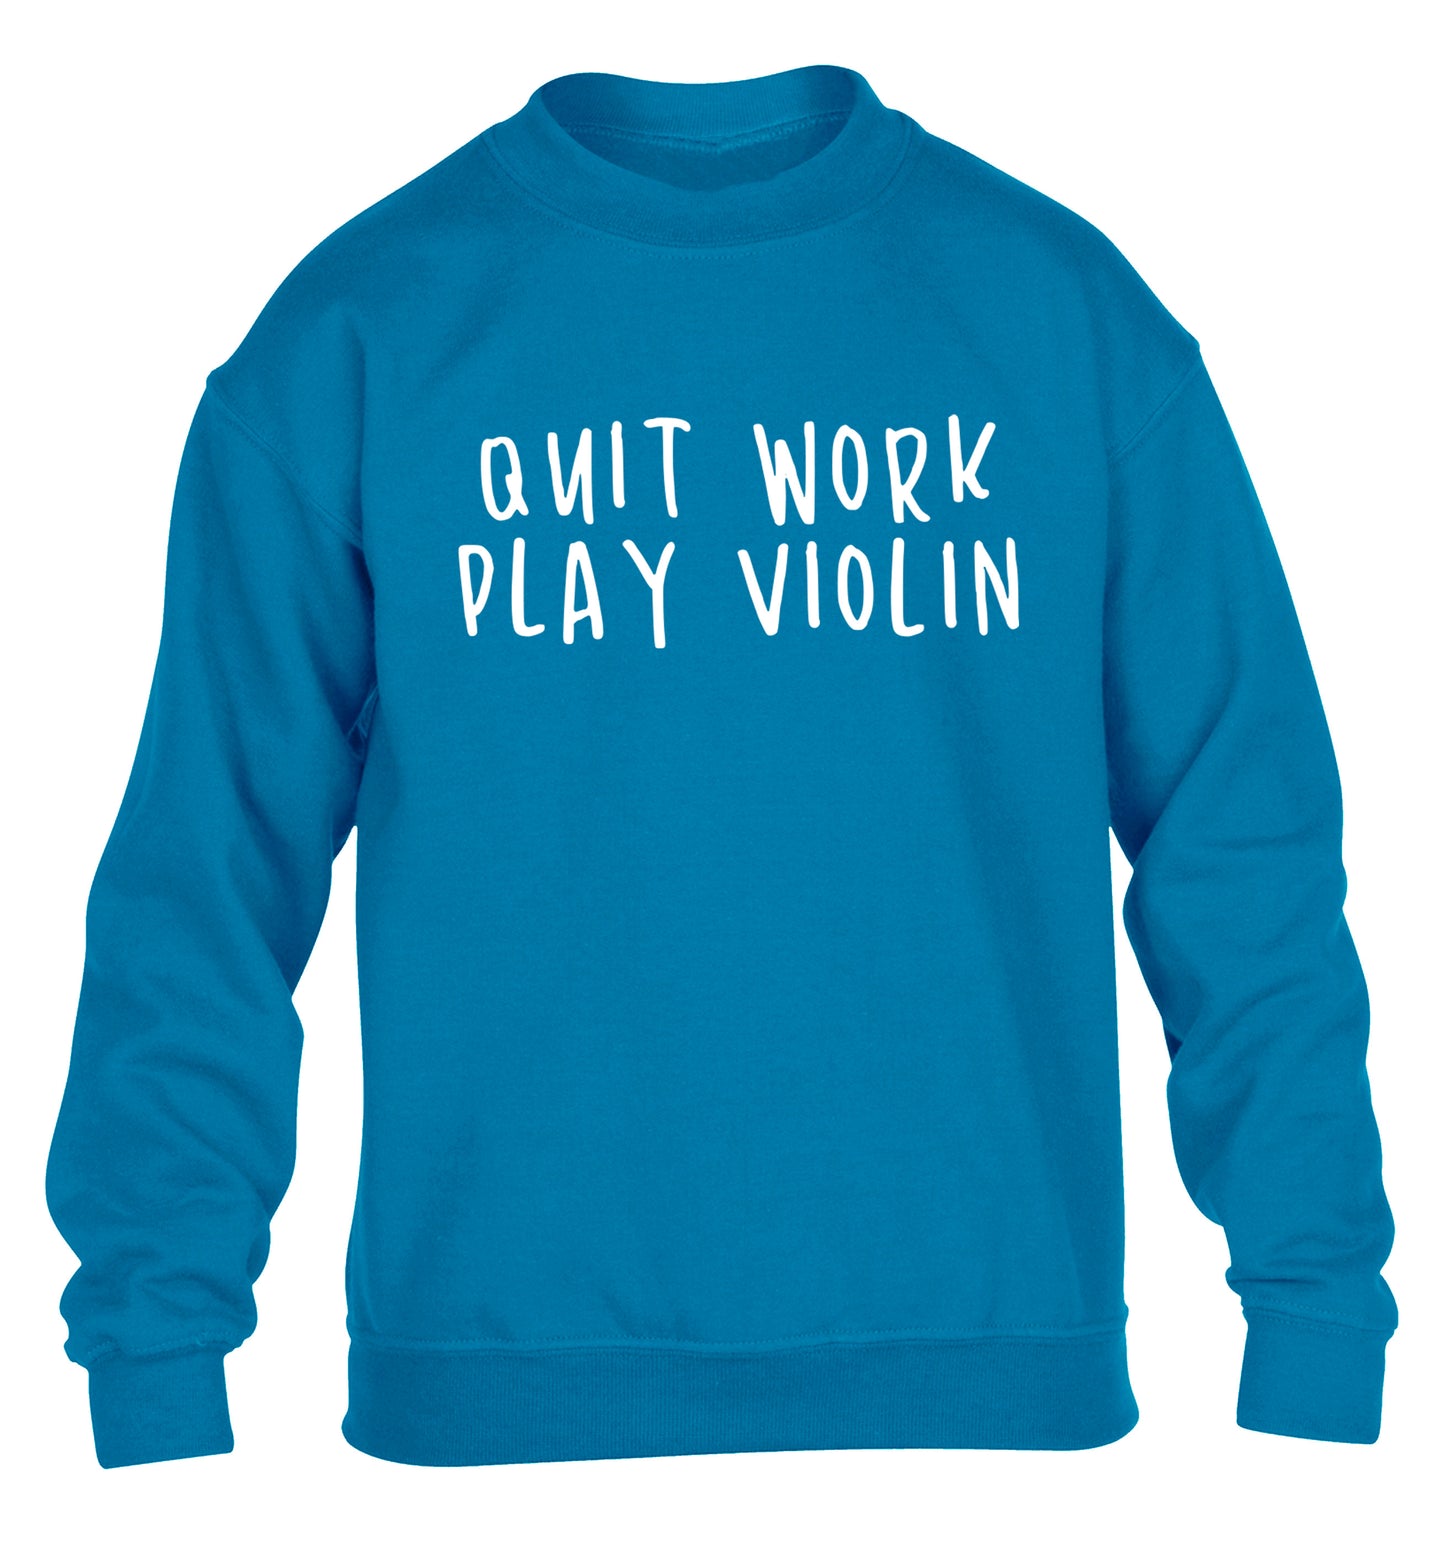 Quit work play violin children's blue sweater 12-13 Years